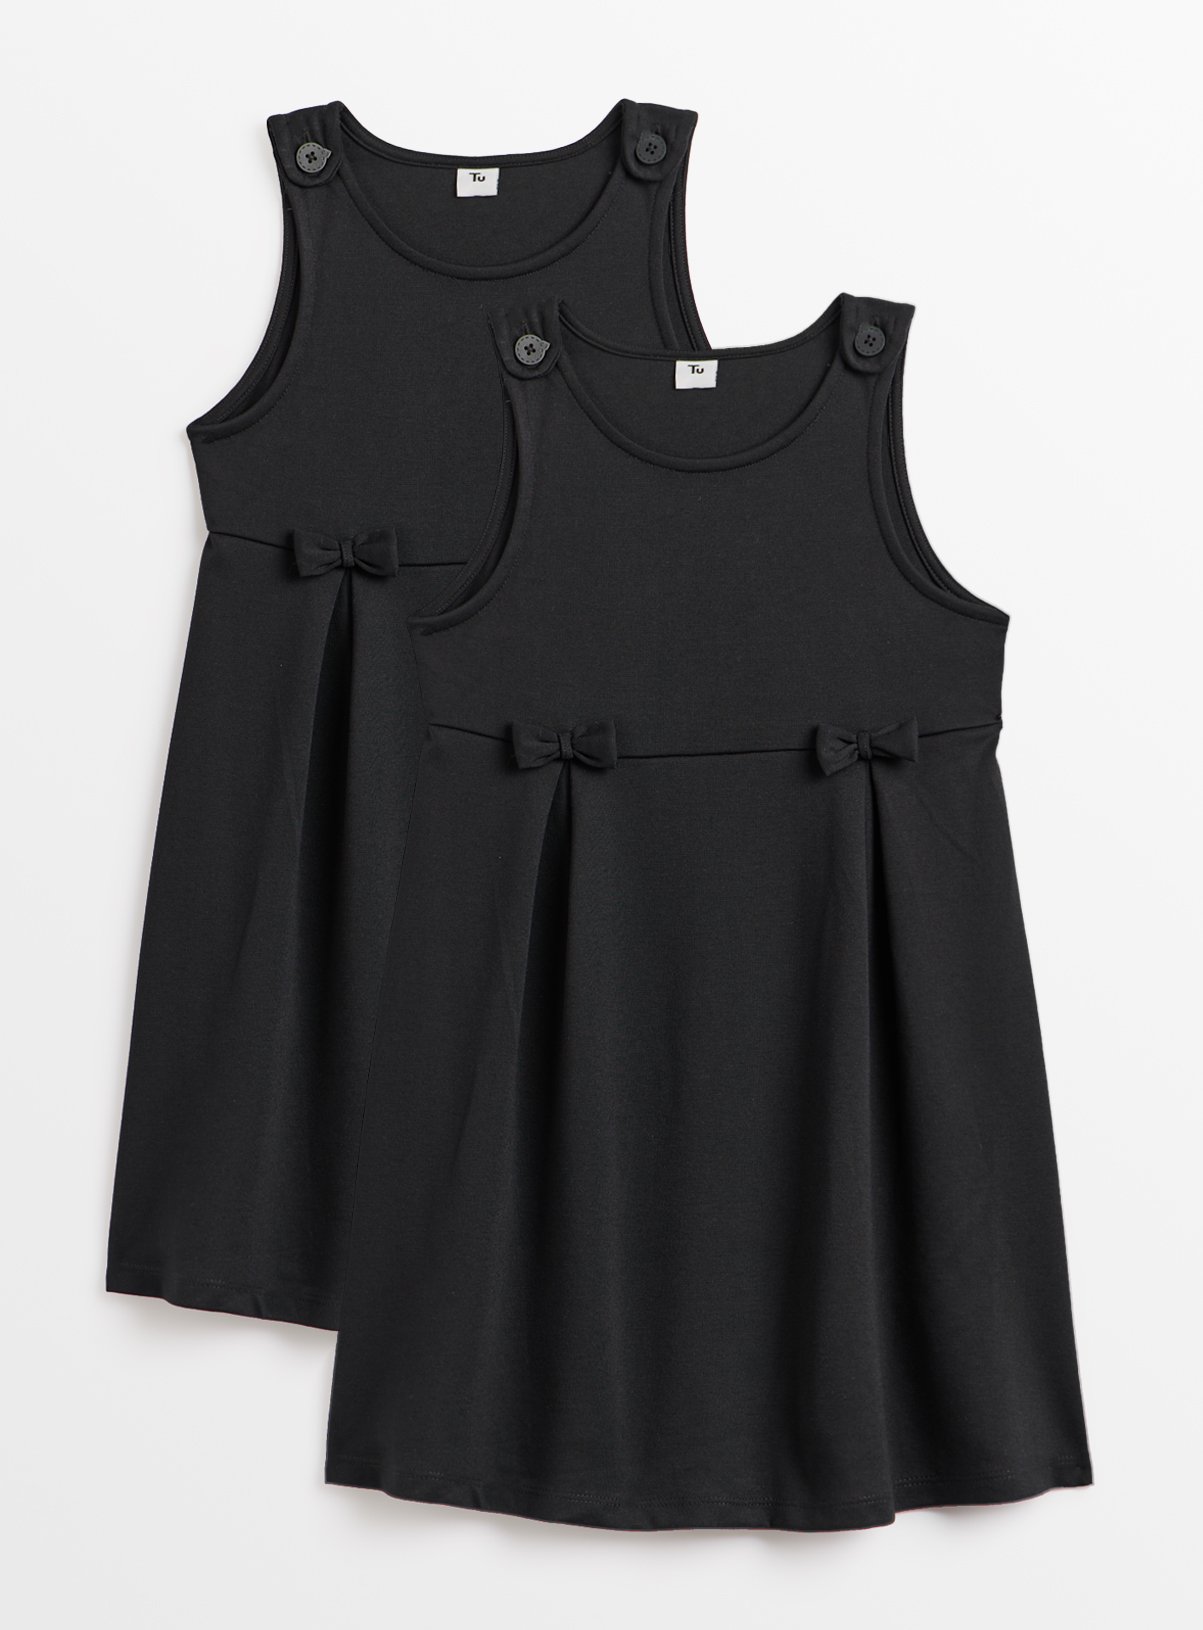 Buy Black Jersey School Pinafore Dress 